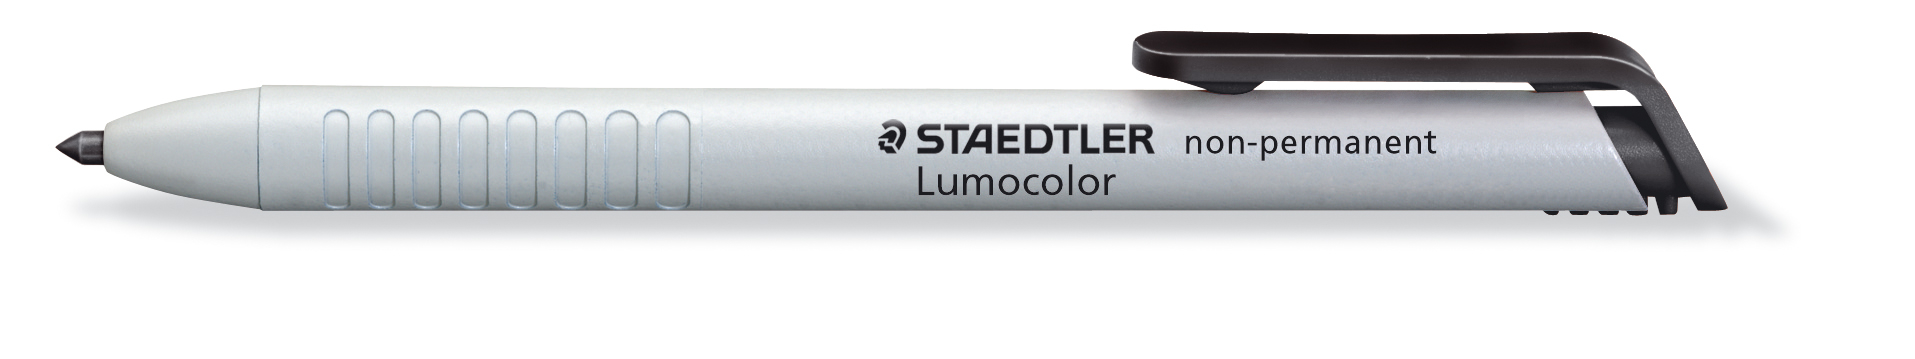 STAEDTLER Lumocolor non-perm. 768N-9 noir